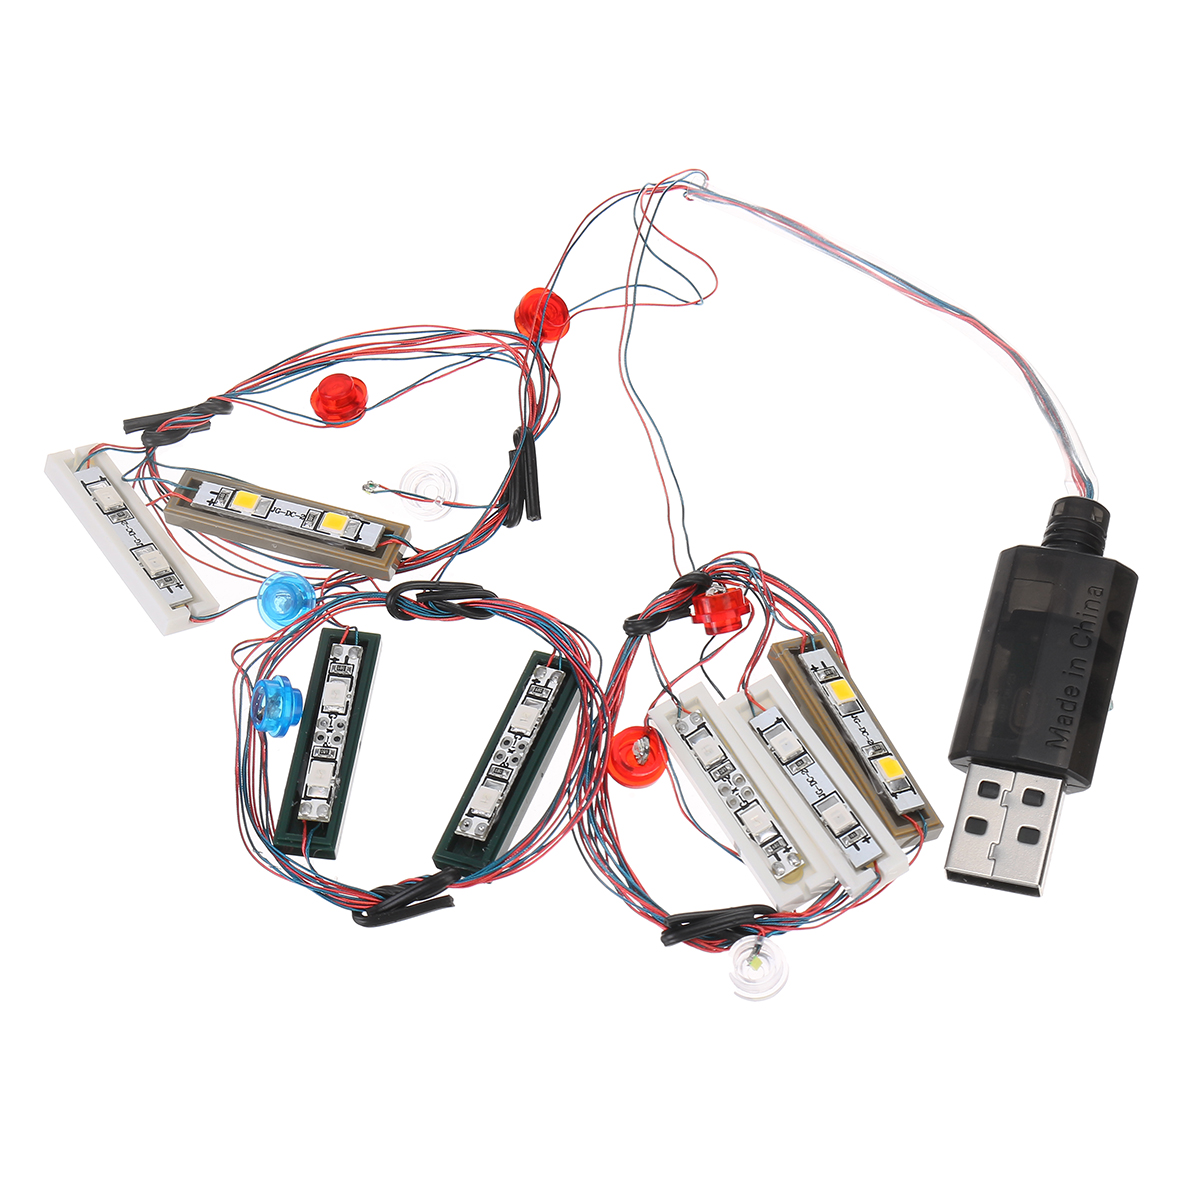 DIY-USB-LED-Strip-Light-Kit-ONLY-For-LEGO-42110-For-Land-Rover-Defender-Car-Bricks-Toy-With-Remote-C-1658165-6